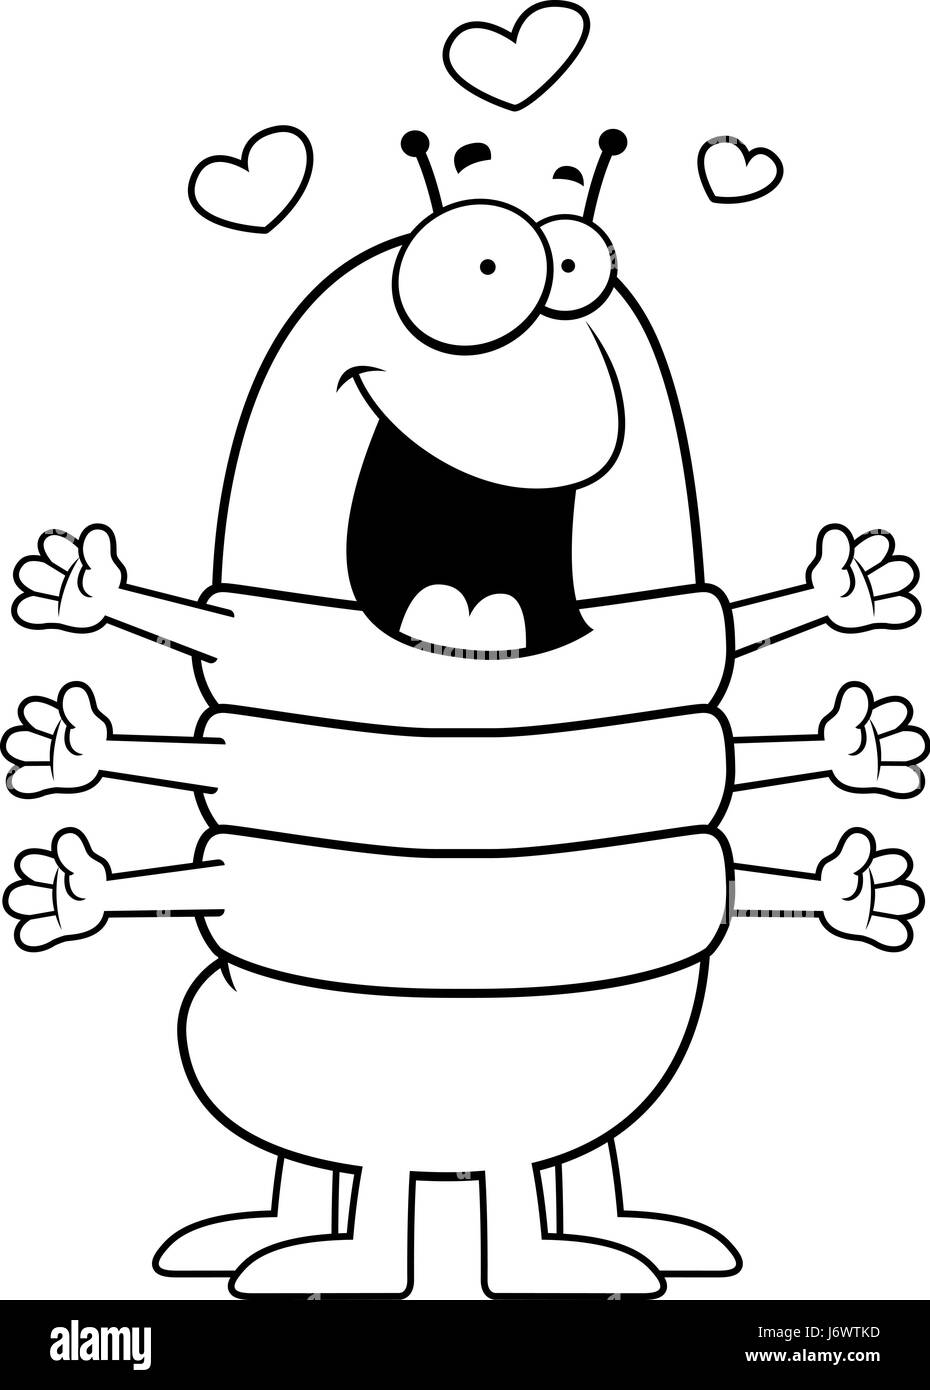 A happy cartoon centipede ready to give a hug. Stock Vector